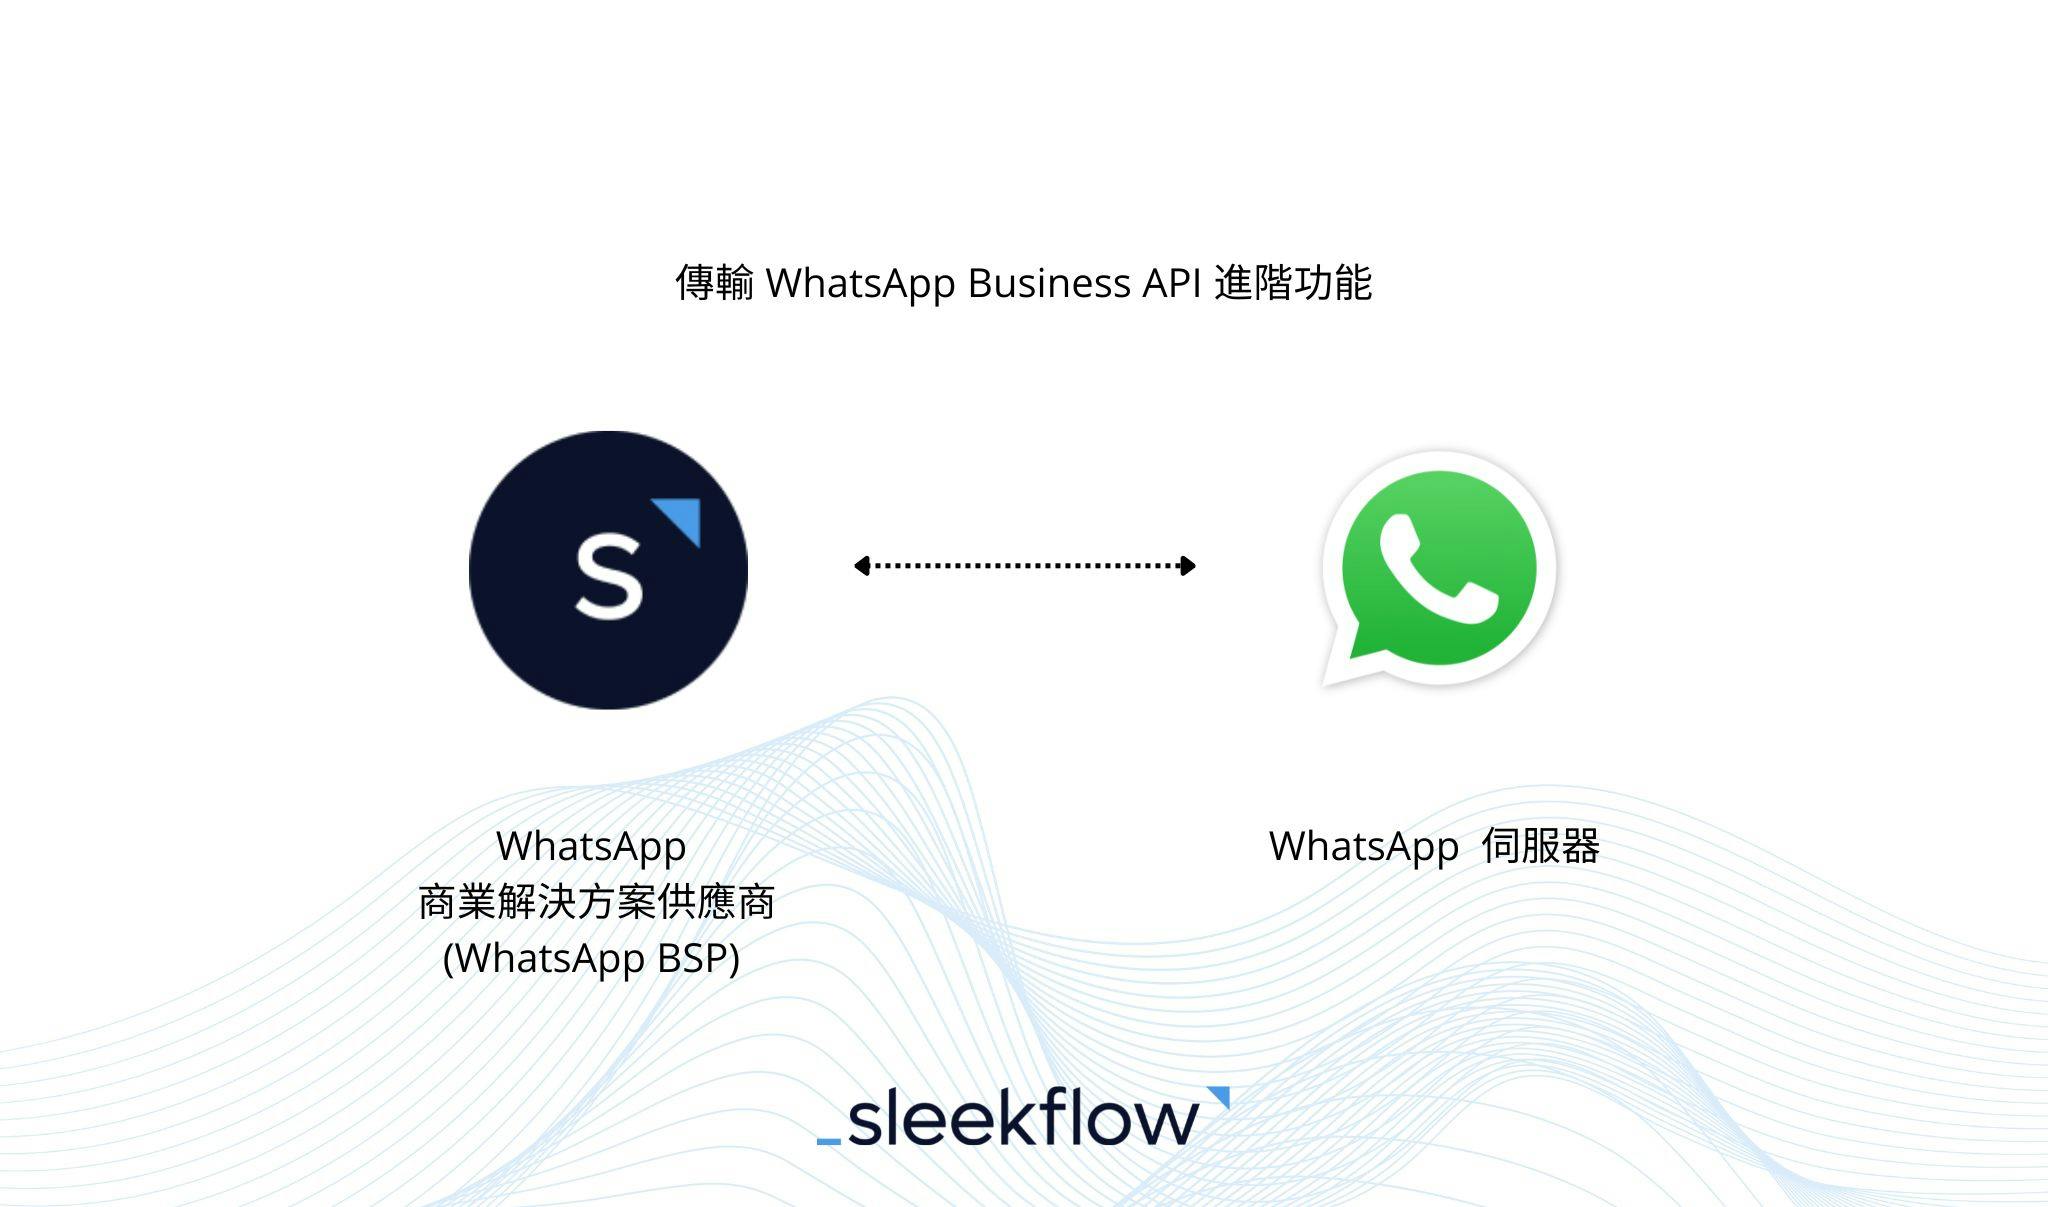 WhatsApp Business API 概念